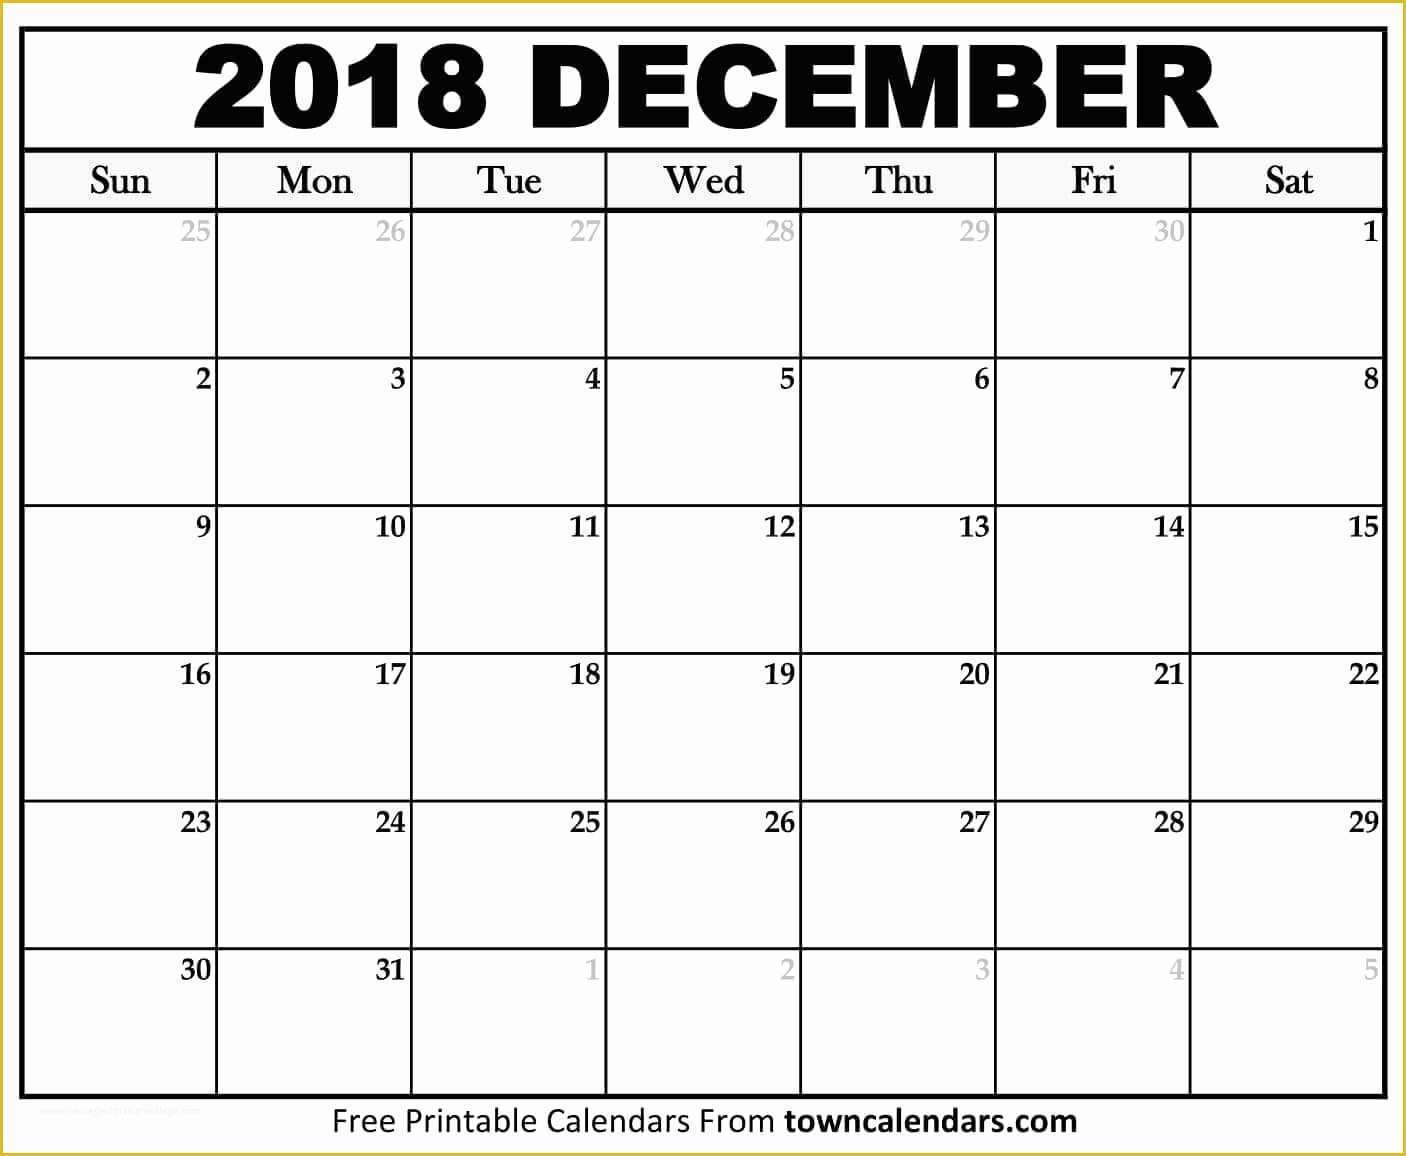 Free Calendar Template 2018 Of Printable December 2018 Calendar towncalendars